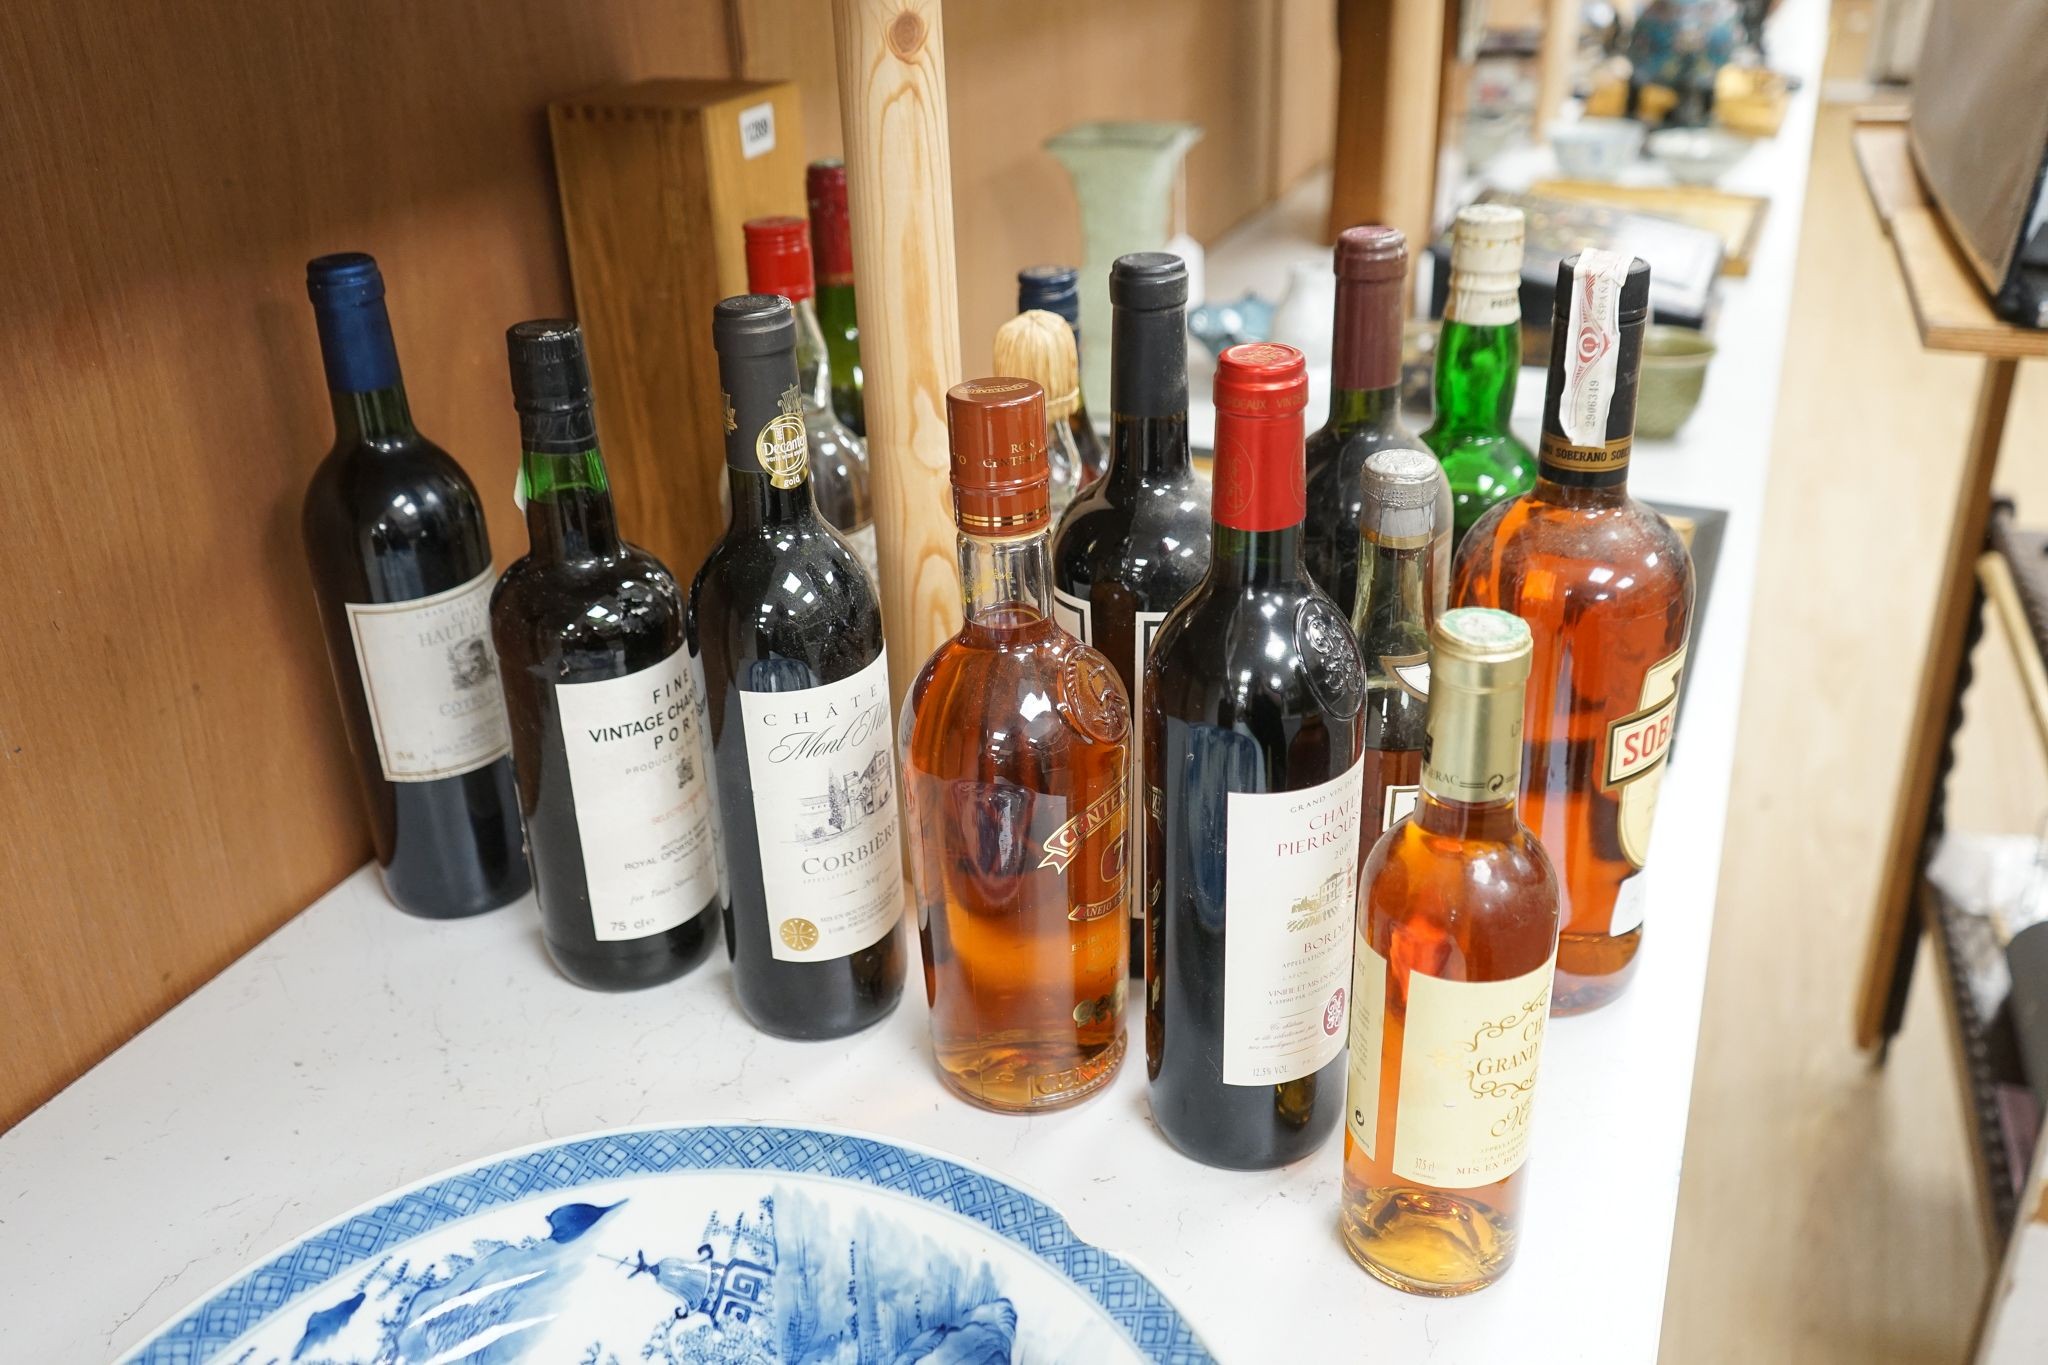 A quantity of assorted wines, brandies, ports, etc.